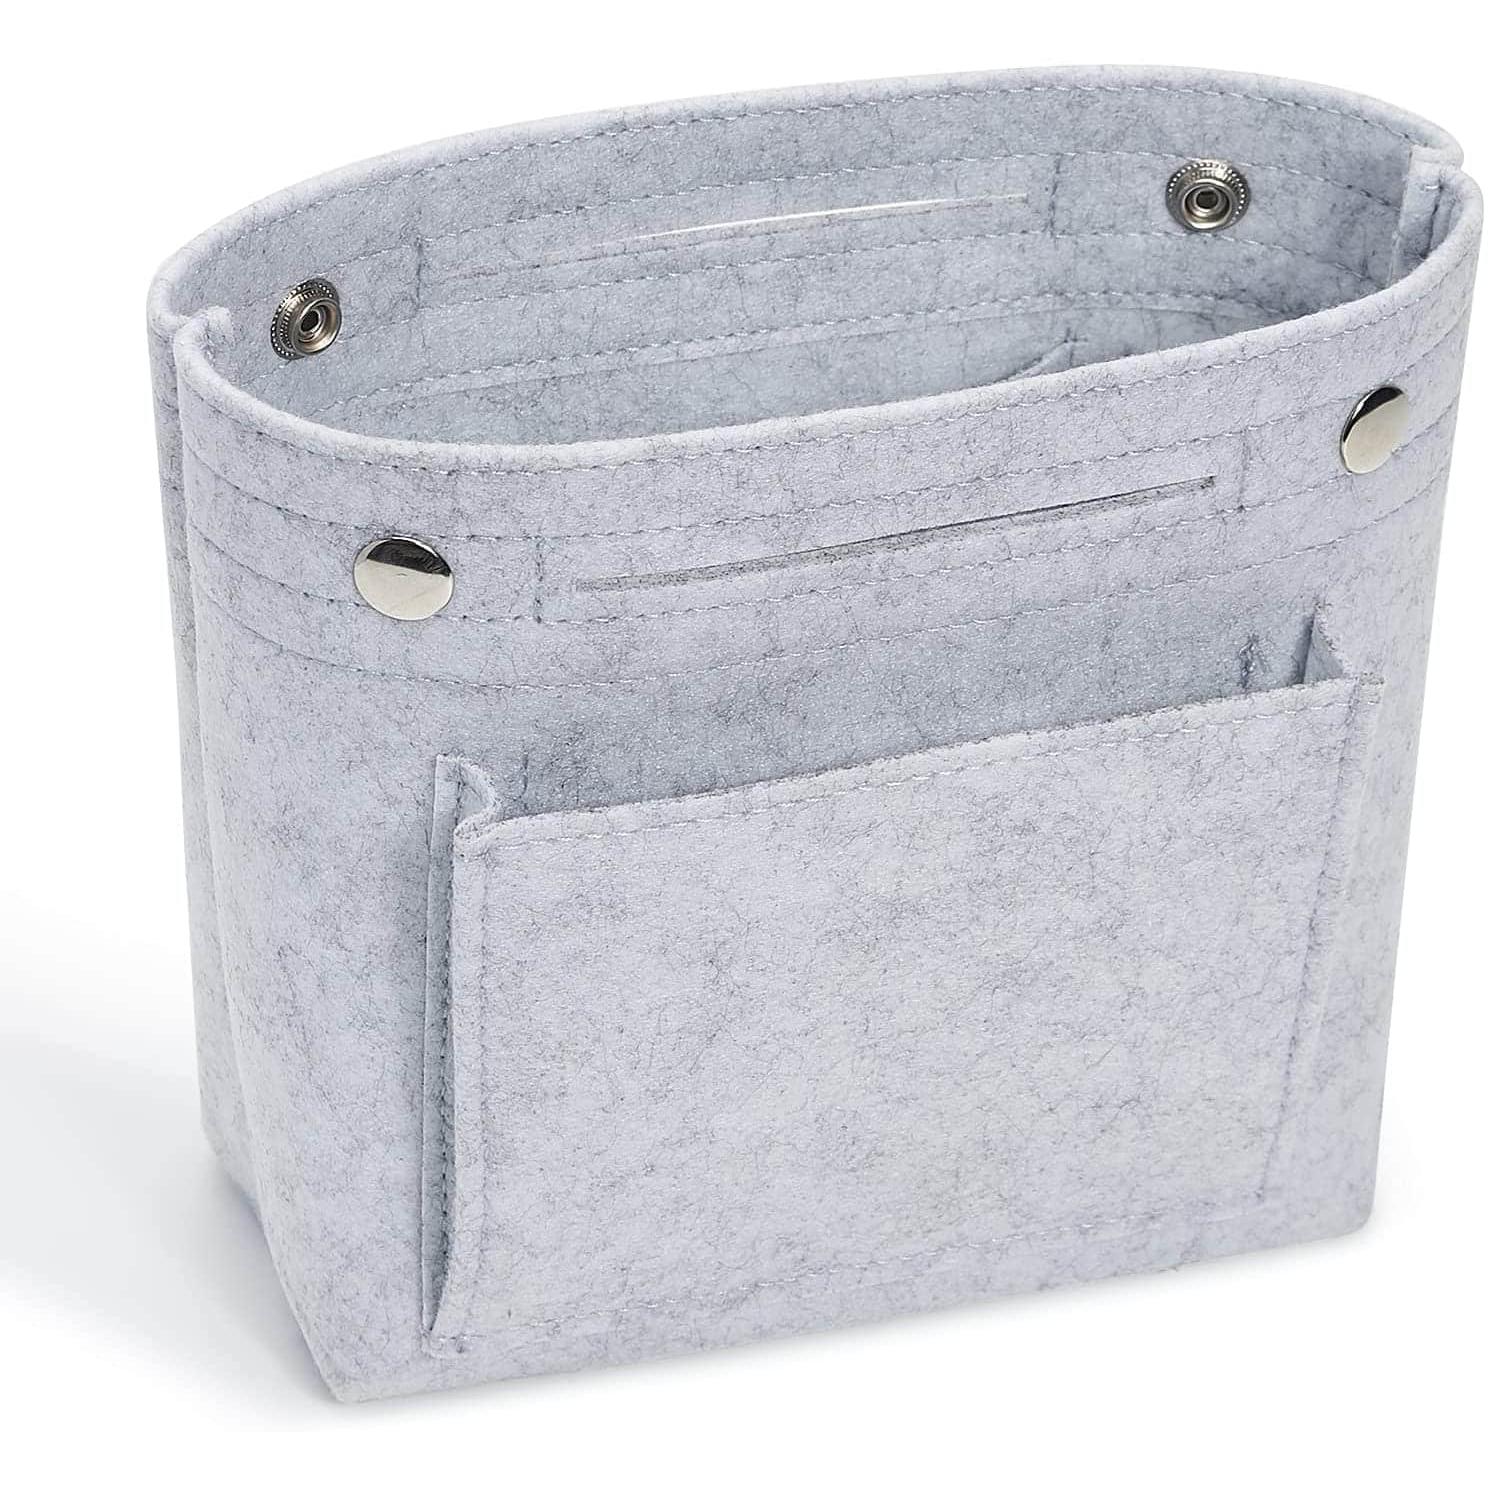 OAikor Felt Fabric Purse Shaper with pockets Handbag Tote Organizer Insert  Bag,Fit GG Marmont small …See more OAikor Felt Fabric Purse Shaper with